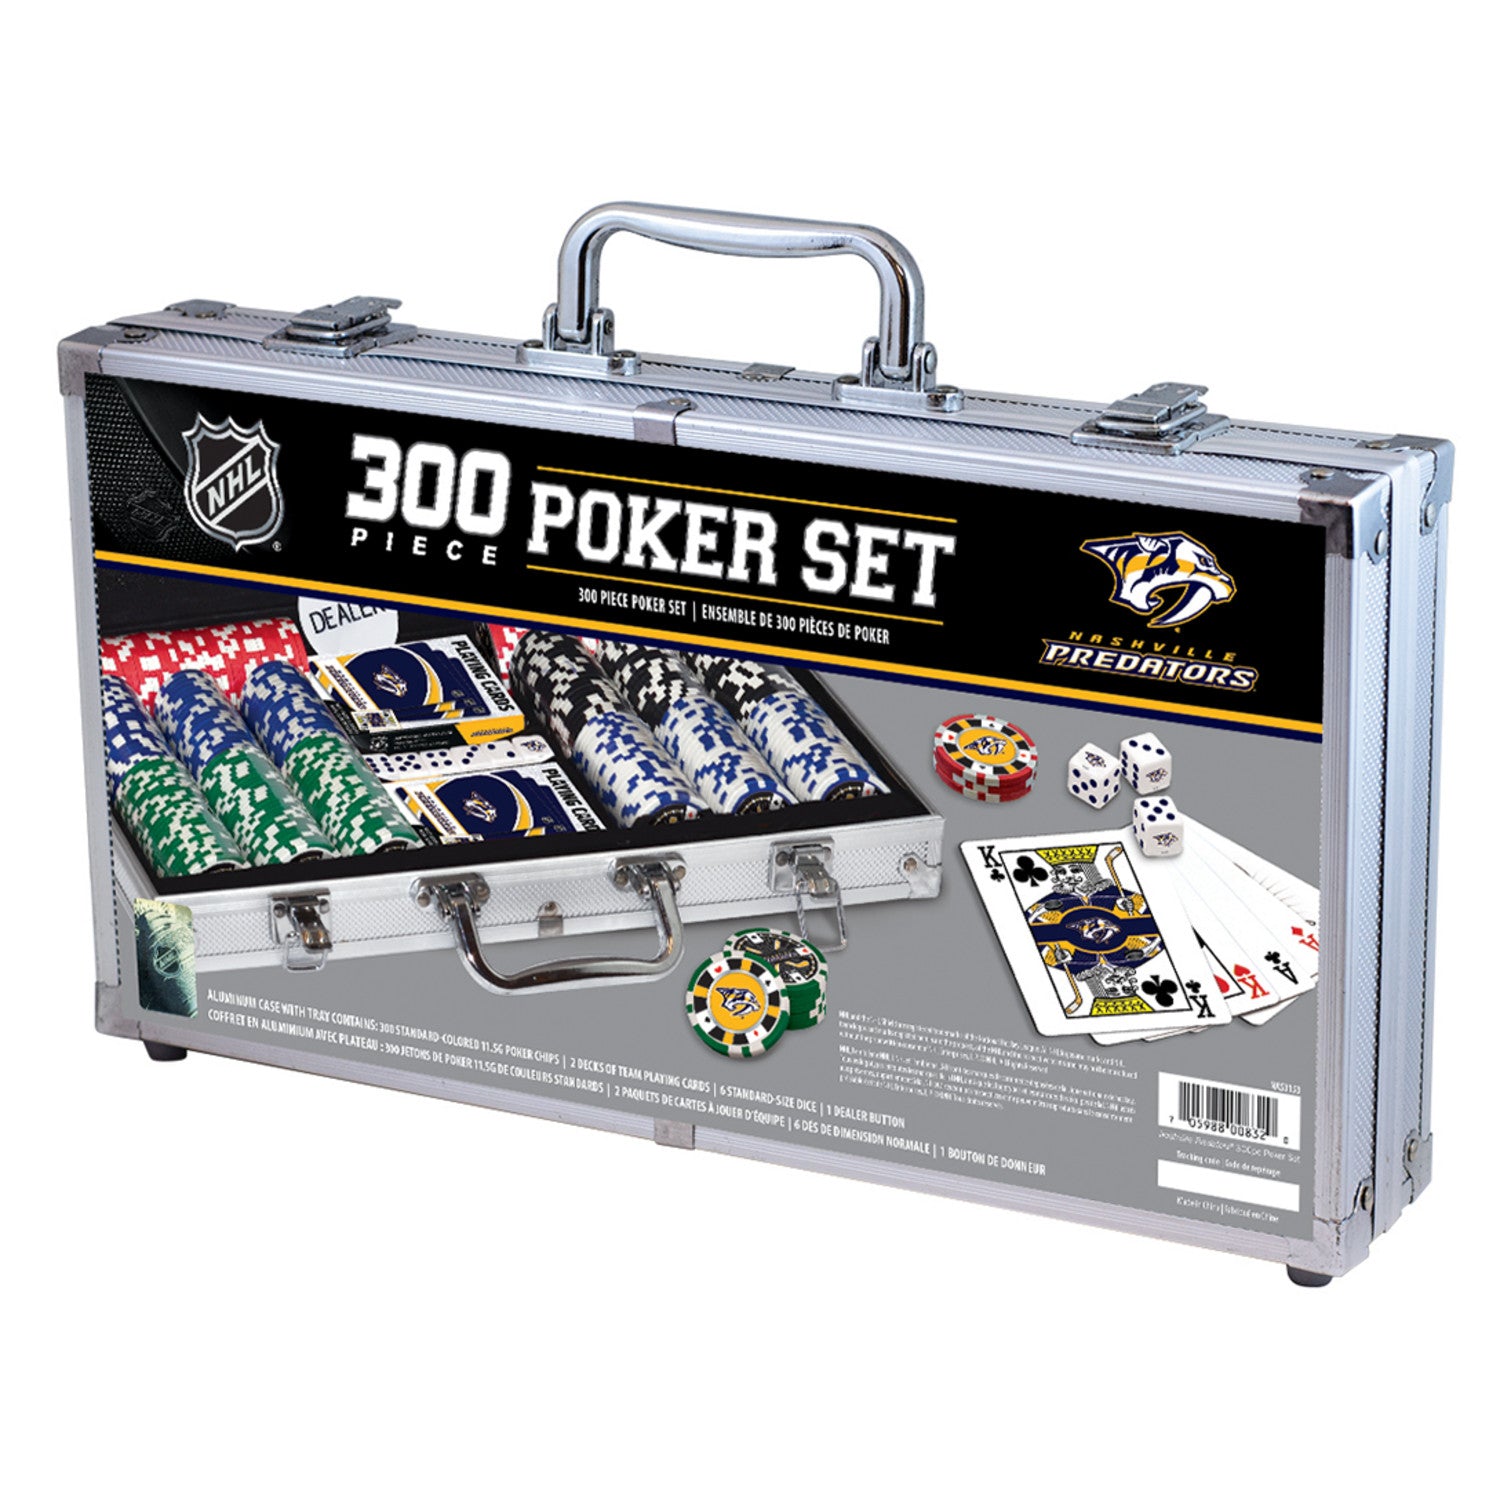 Nashville Predators 300 Piece Poker Set